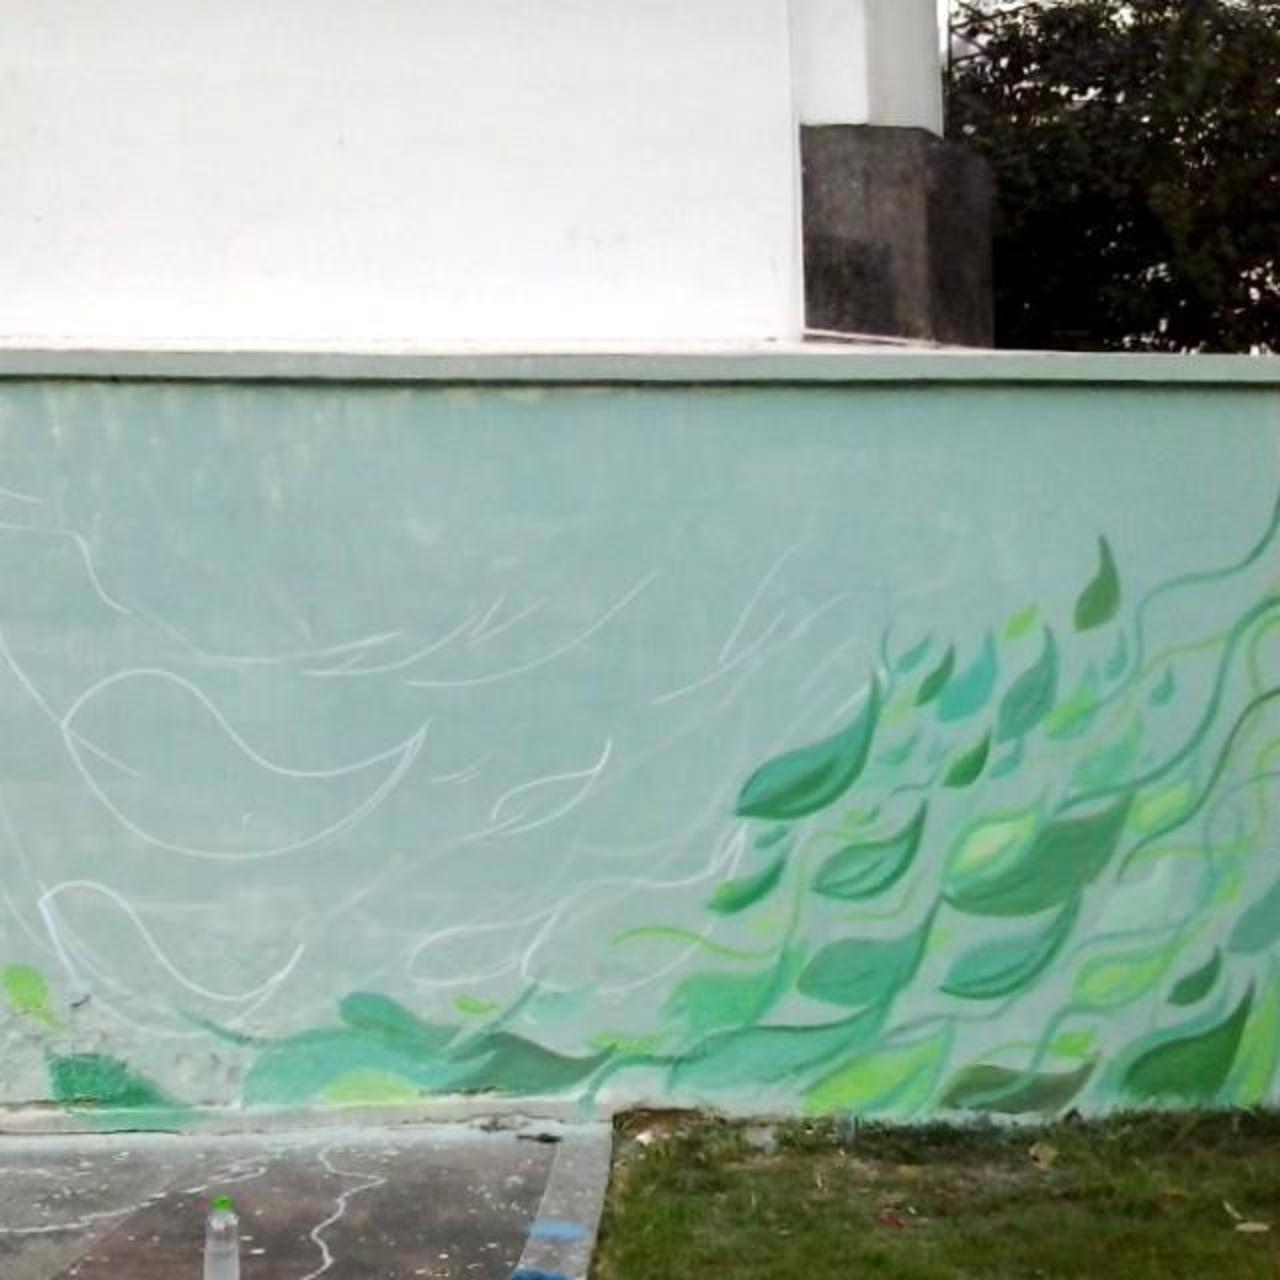 Work in progress #wip #graffiti #streetart #streetartrio #draw #painting by diegoazeredoo http://t.co/puu7GlUAqE